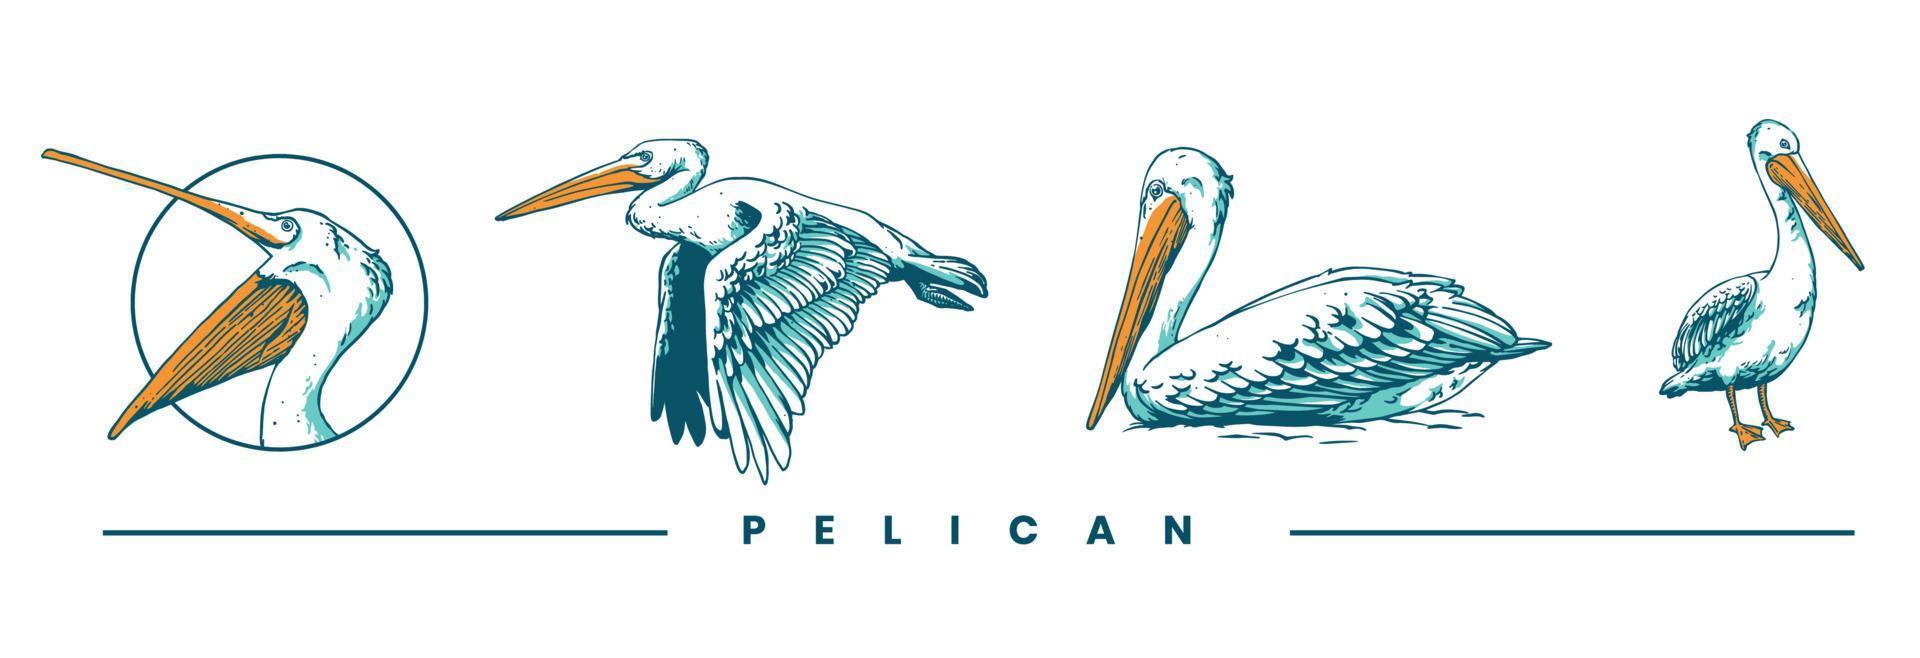 pelican hand drawn vector